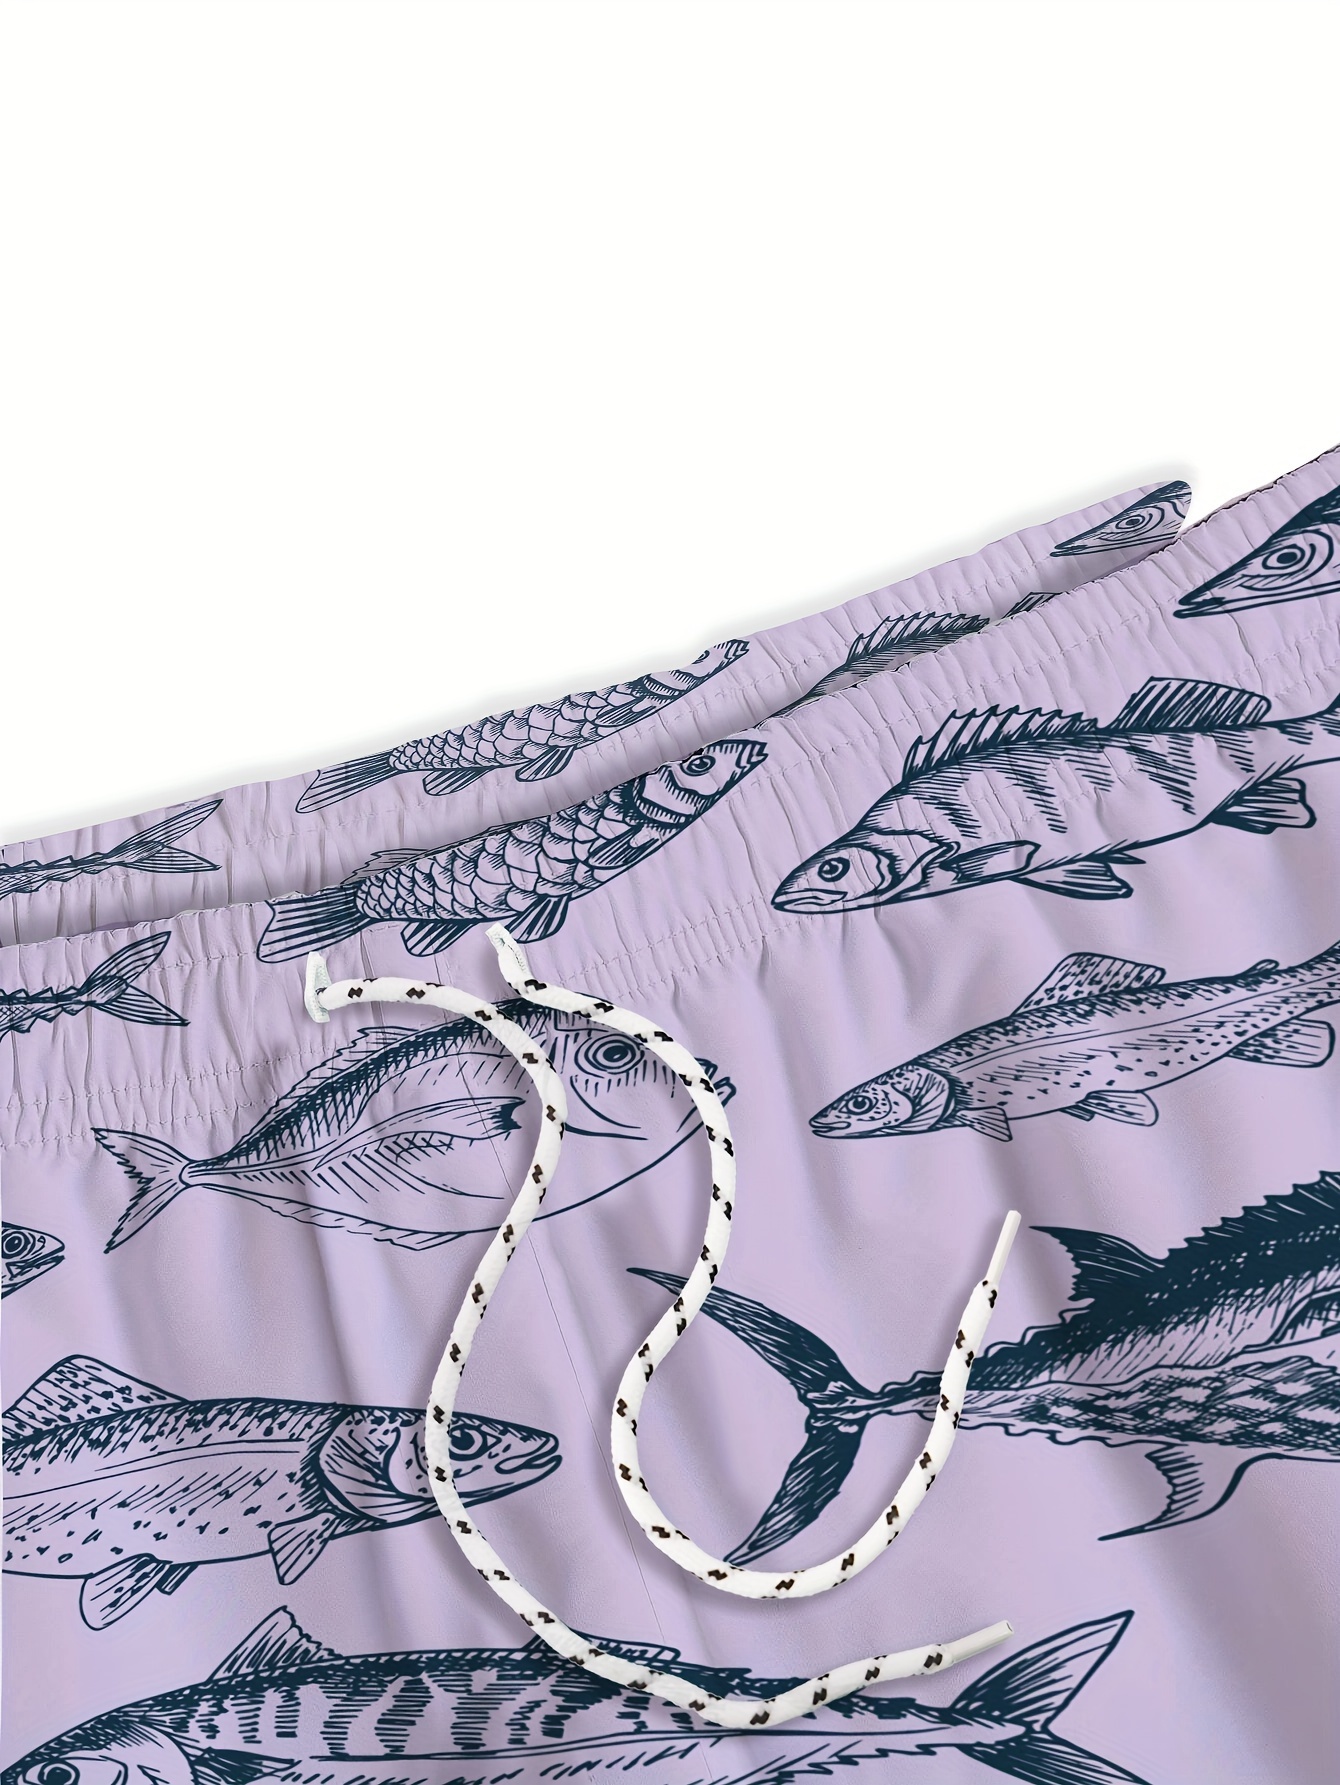 Men's Fashion Fish Print Active Shorts, Drawstring Beach Shorts For Summer  Beach Resort, Hawaiian Style